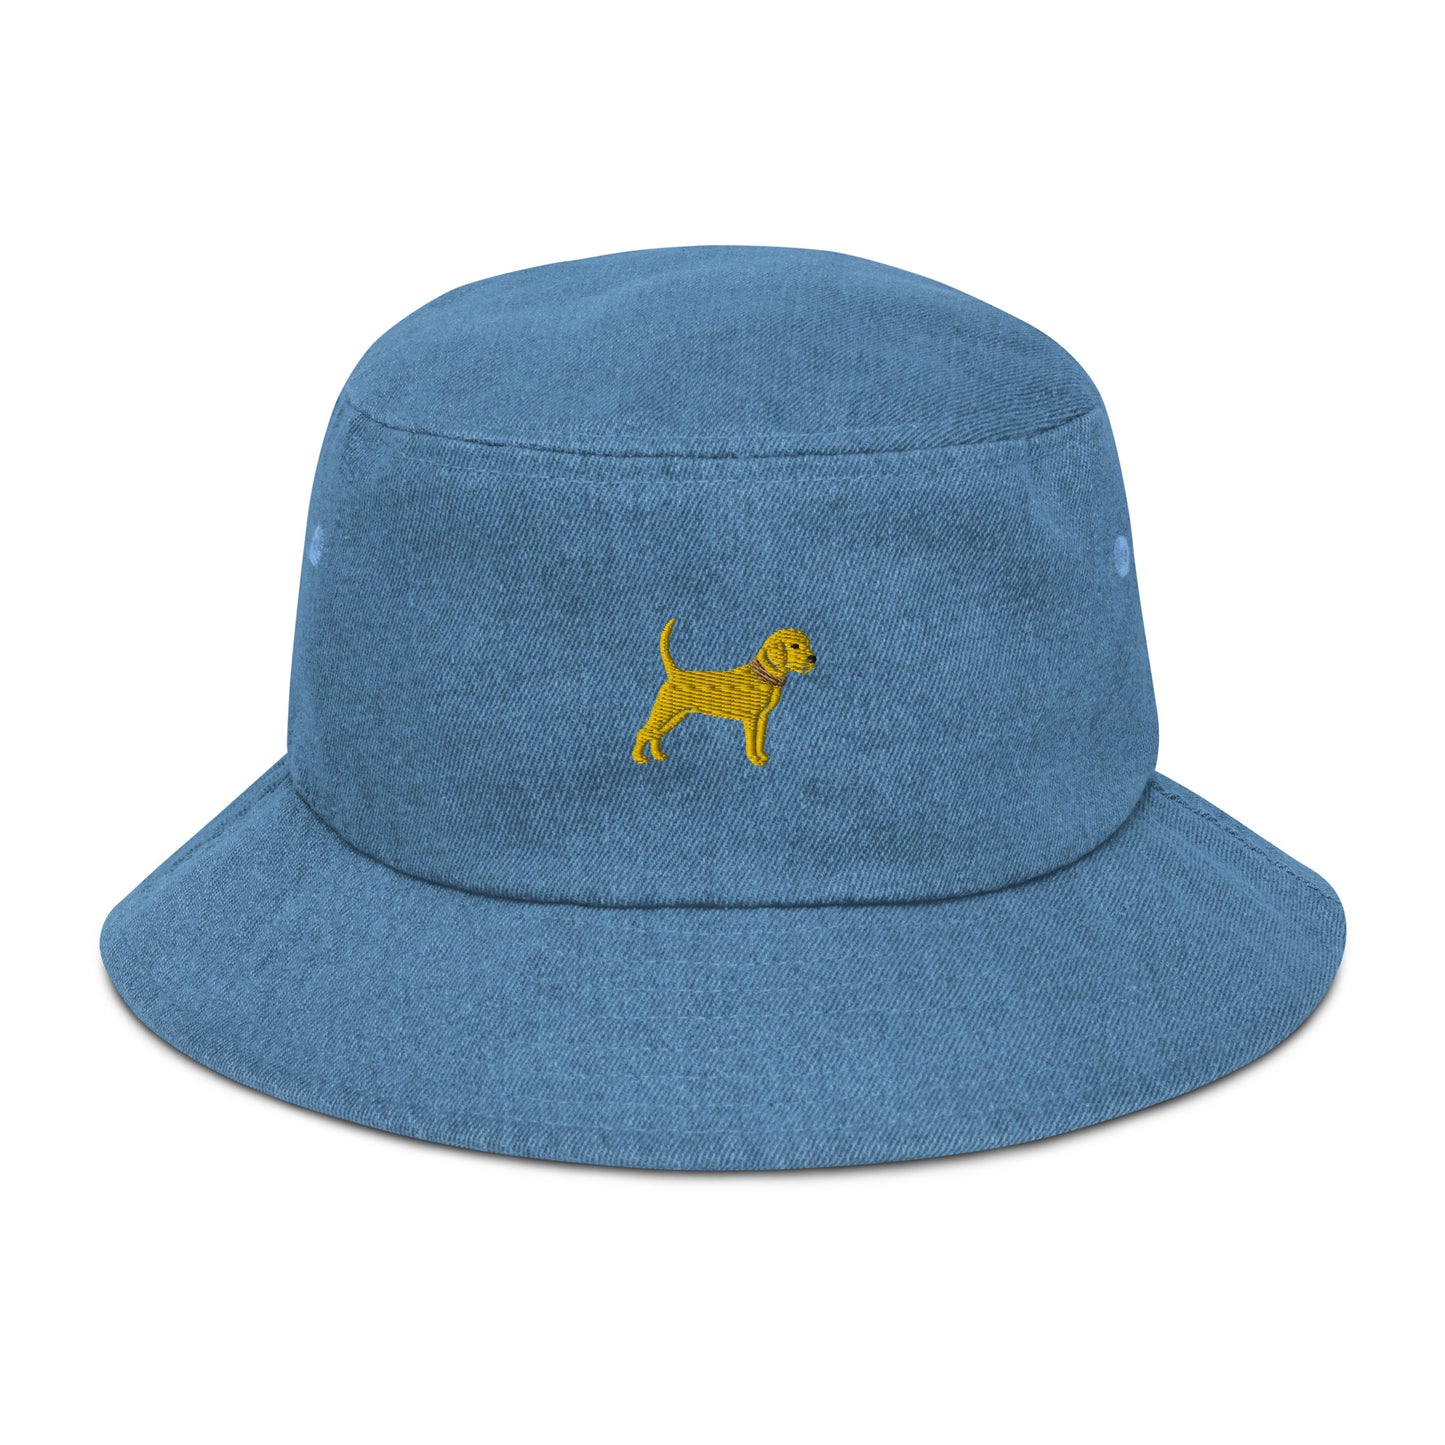 Unleashed Life Little Yellow Dog Denim bucket hat